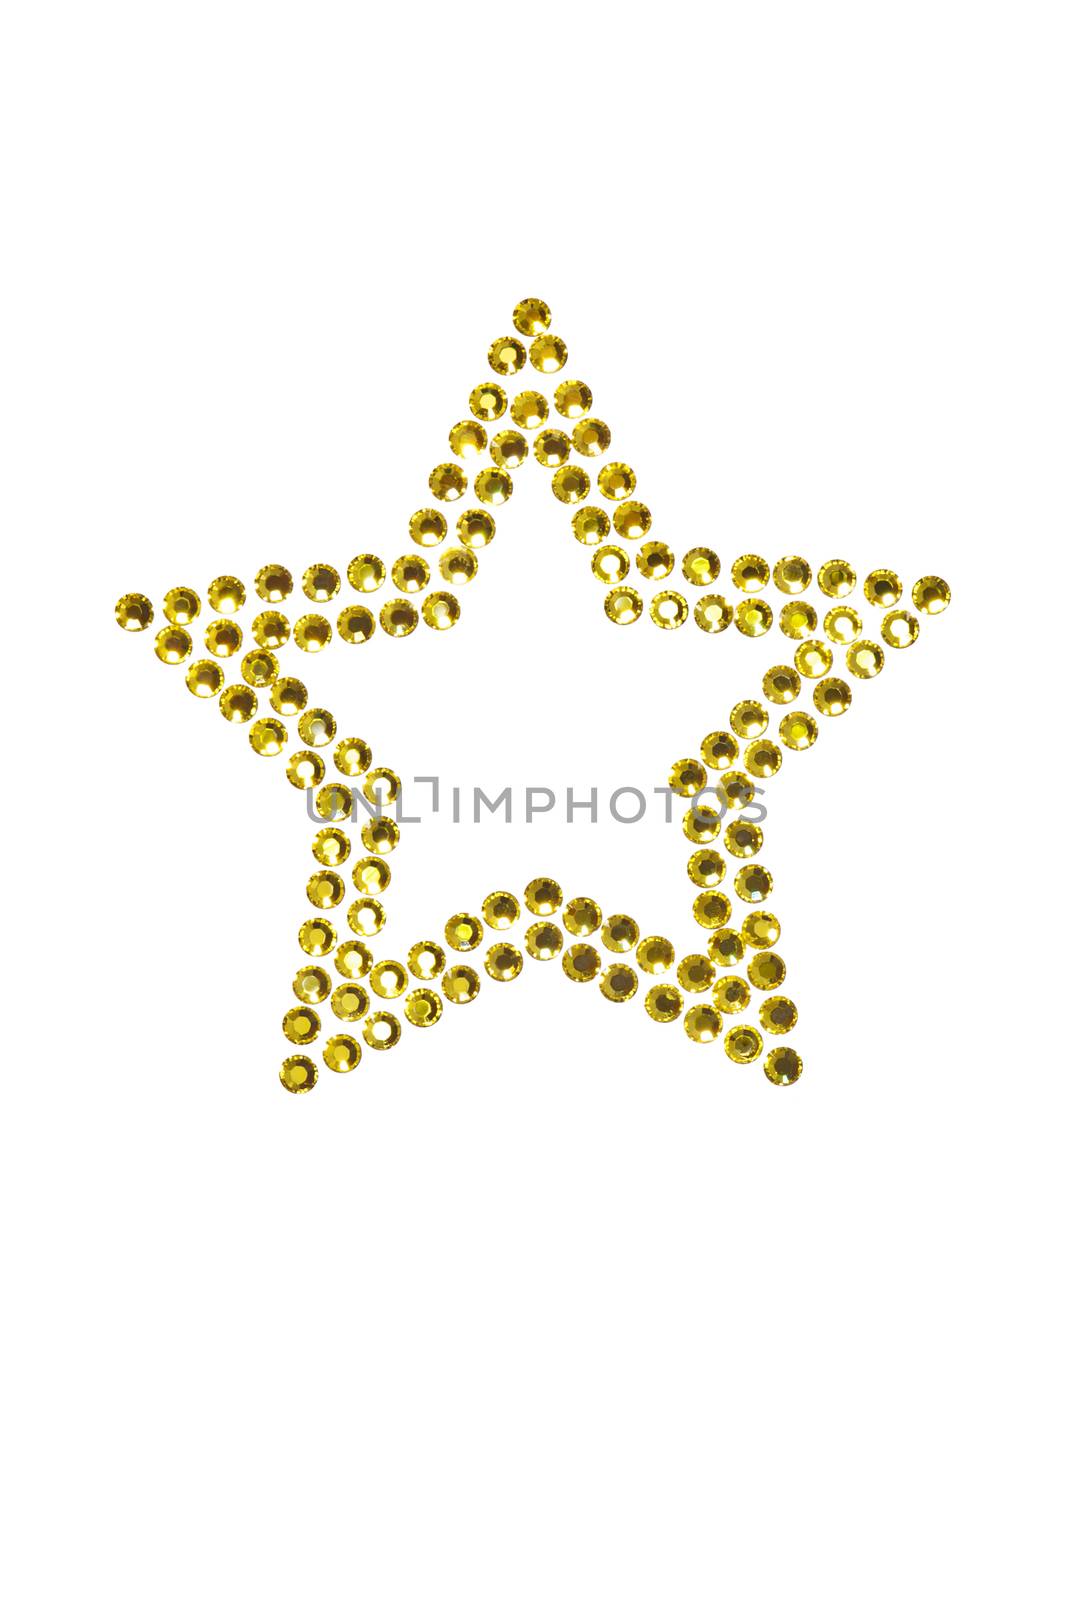 Star made of rhinestones by 3523Studio